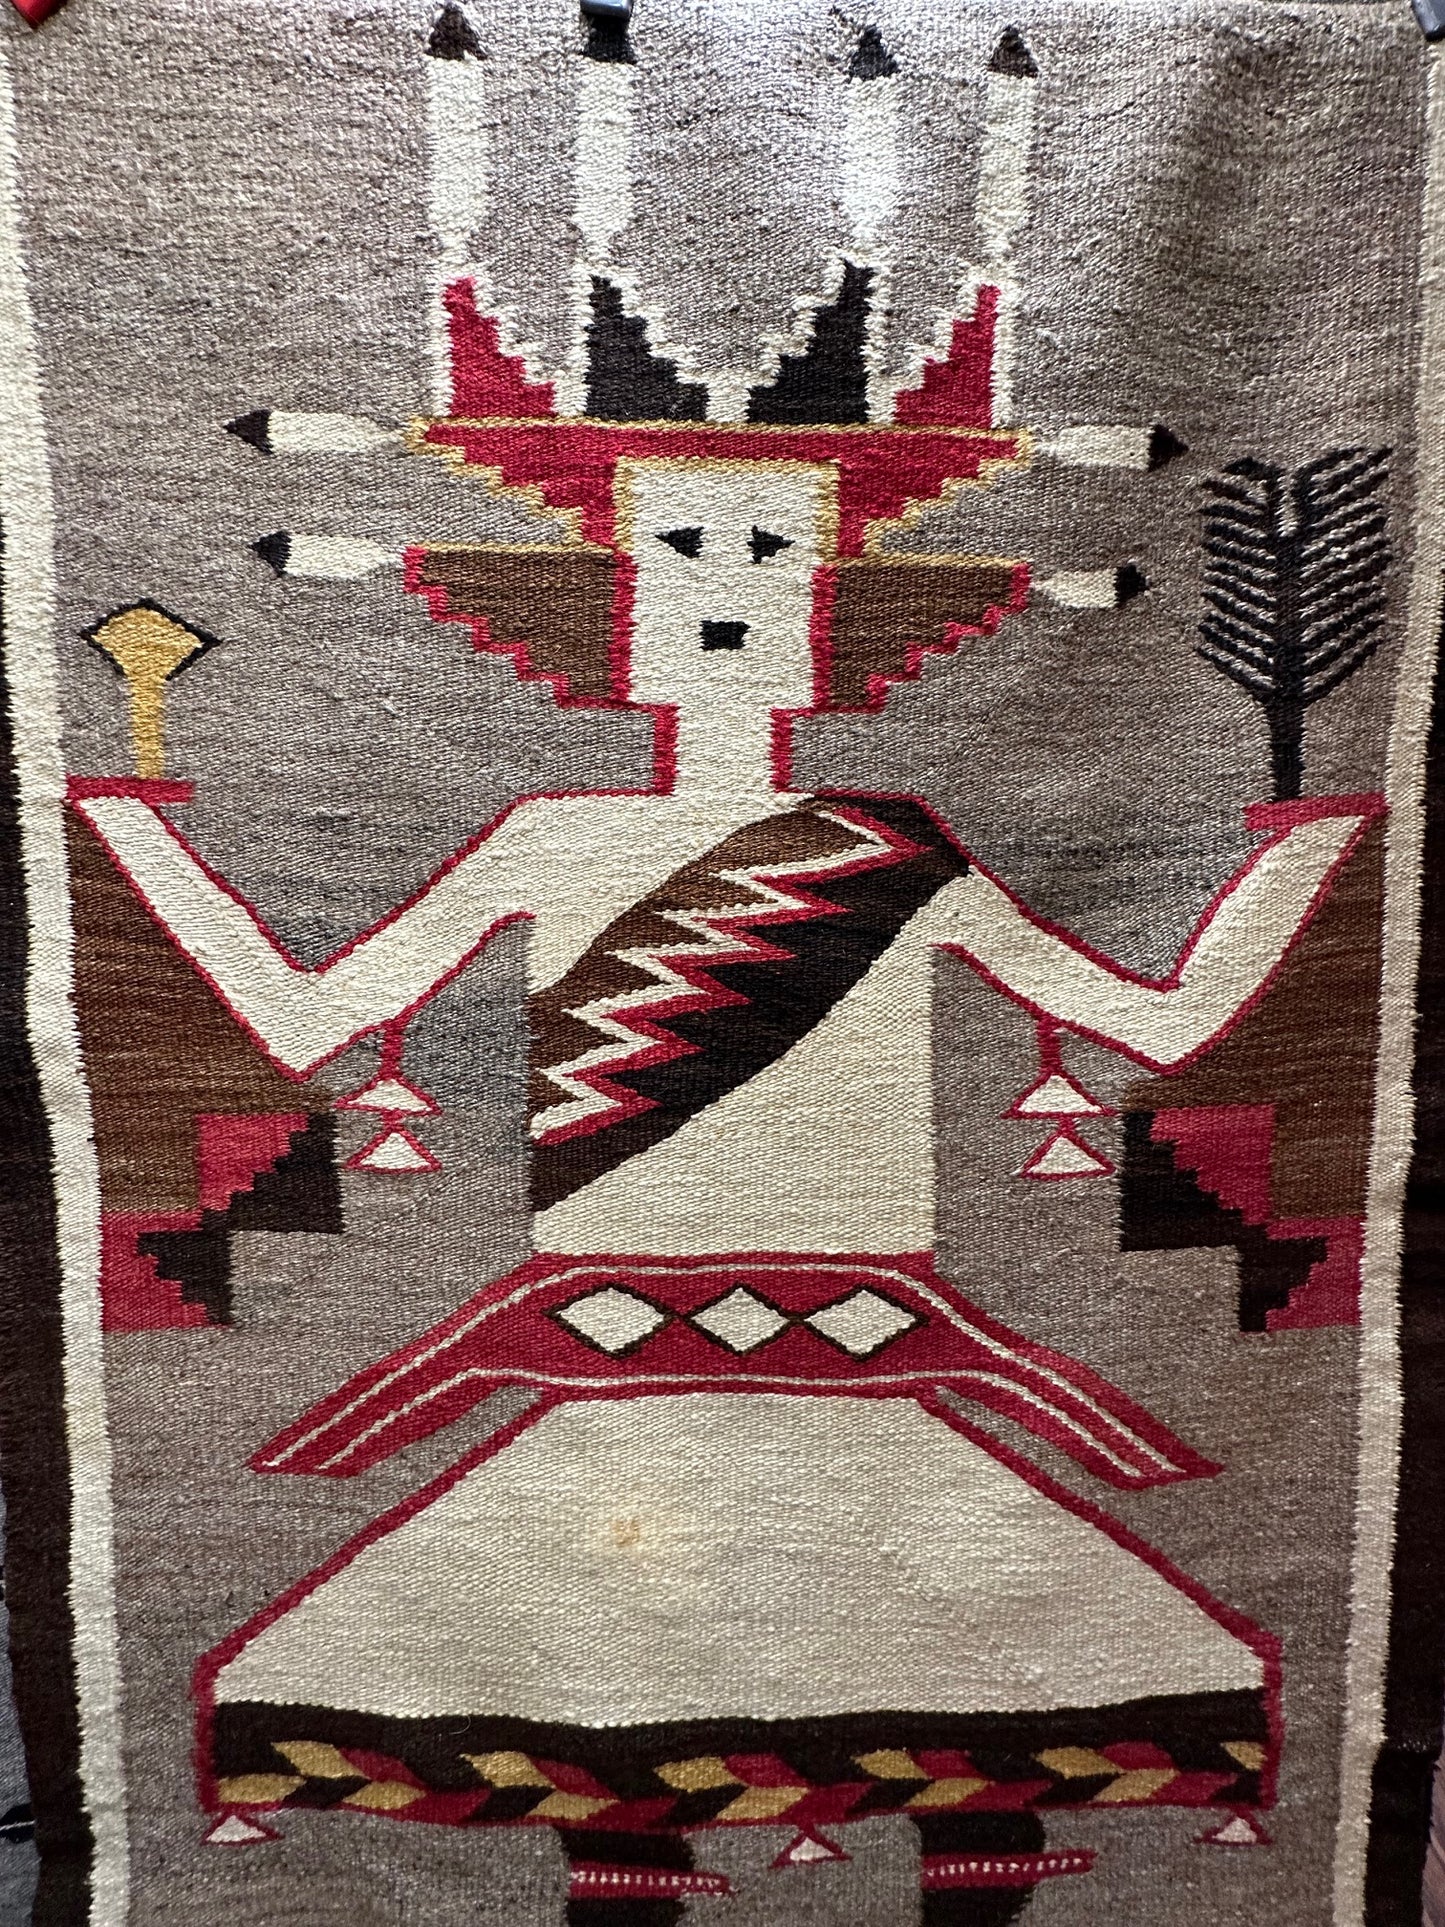 Antique Butterfly Maiden Navajo Weaving - 37" x 60"